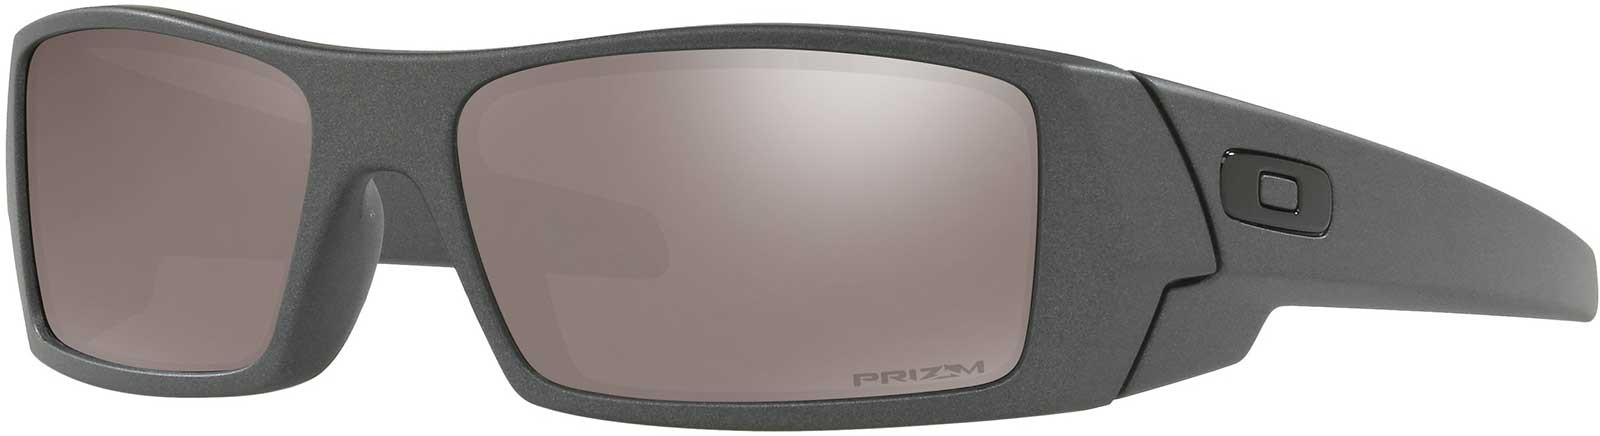 OAKLEY Gascan Tonal Thin Blue Line/Prizm Black Polarized Lens Sunglasses  (OO9014-8560) - Free Shipping